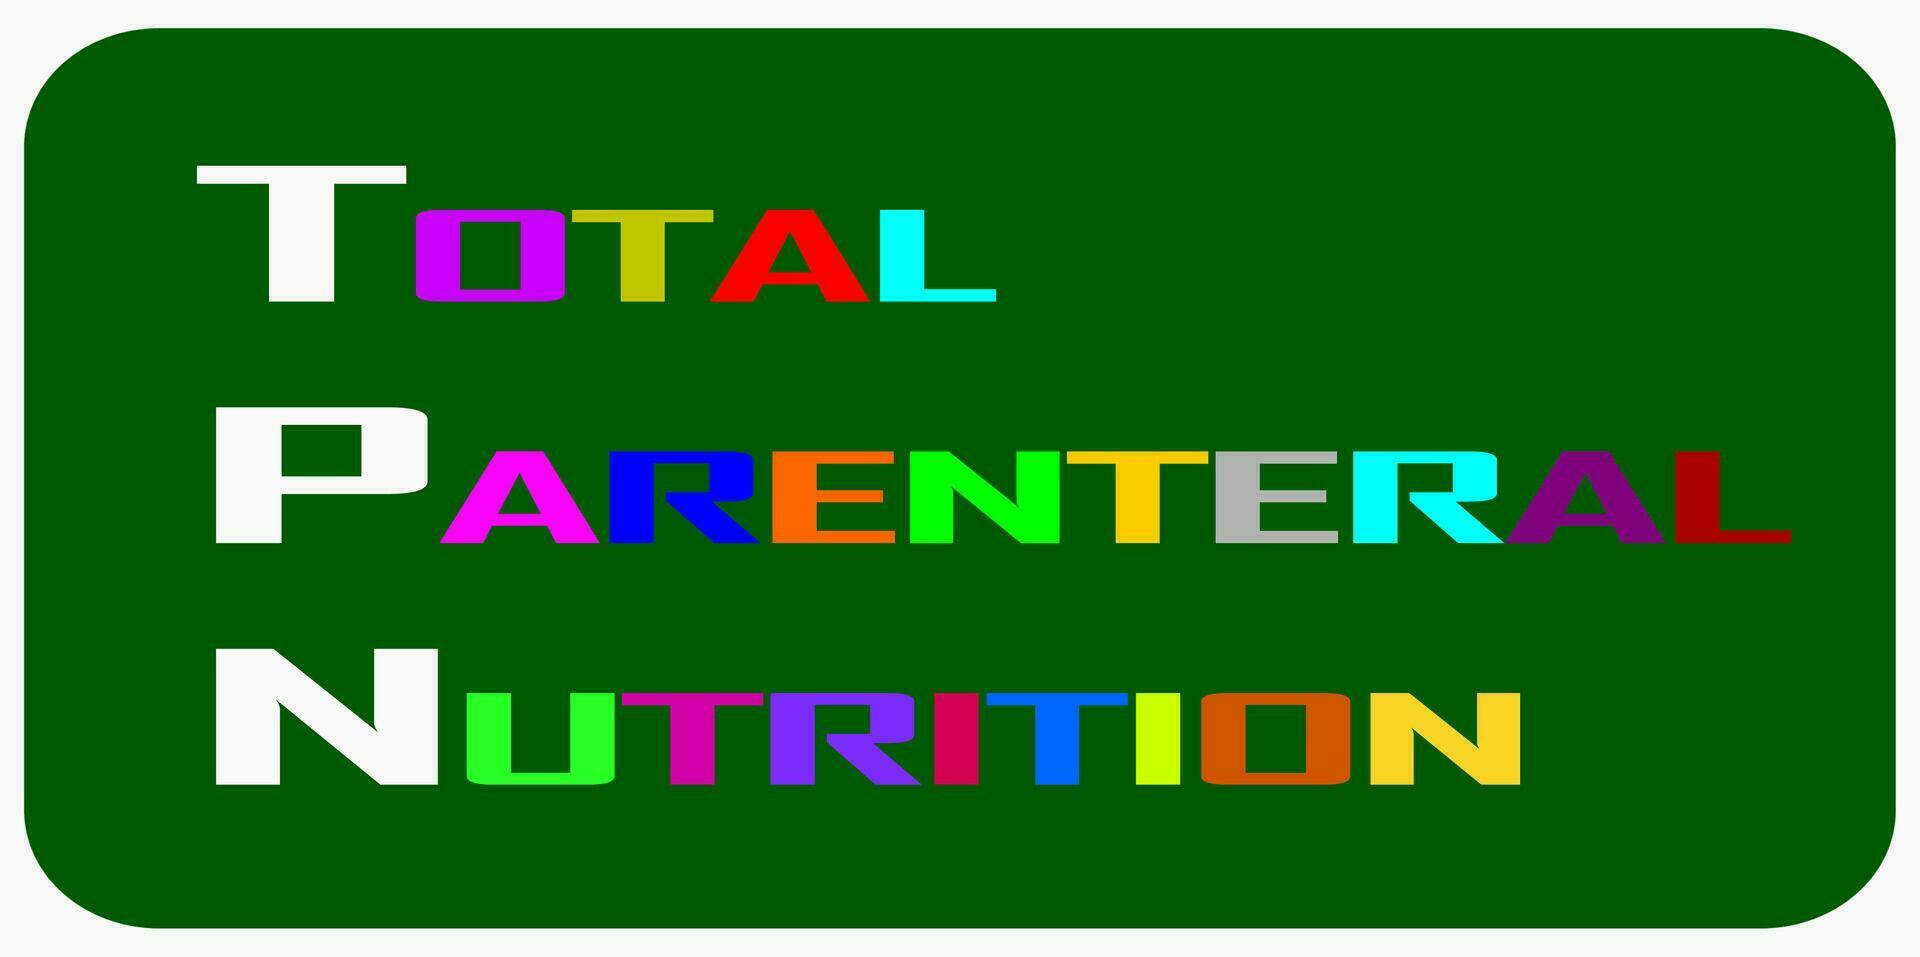 tpn-total parenteral nutrición. componer de ivfe, aminado ácidos, dextrosa, mineral, rastro elemento, y agua. carta, nombre, palabra., texto conceptos. vector